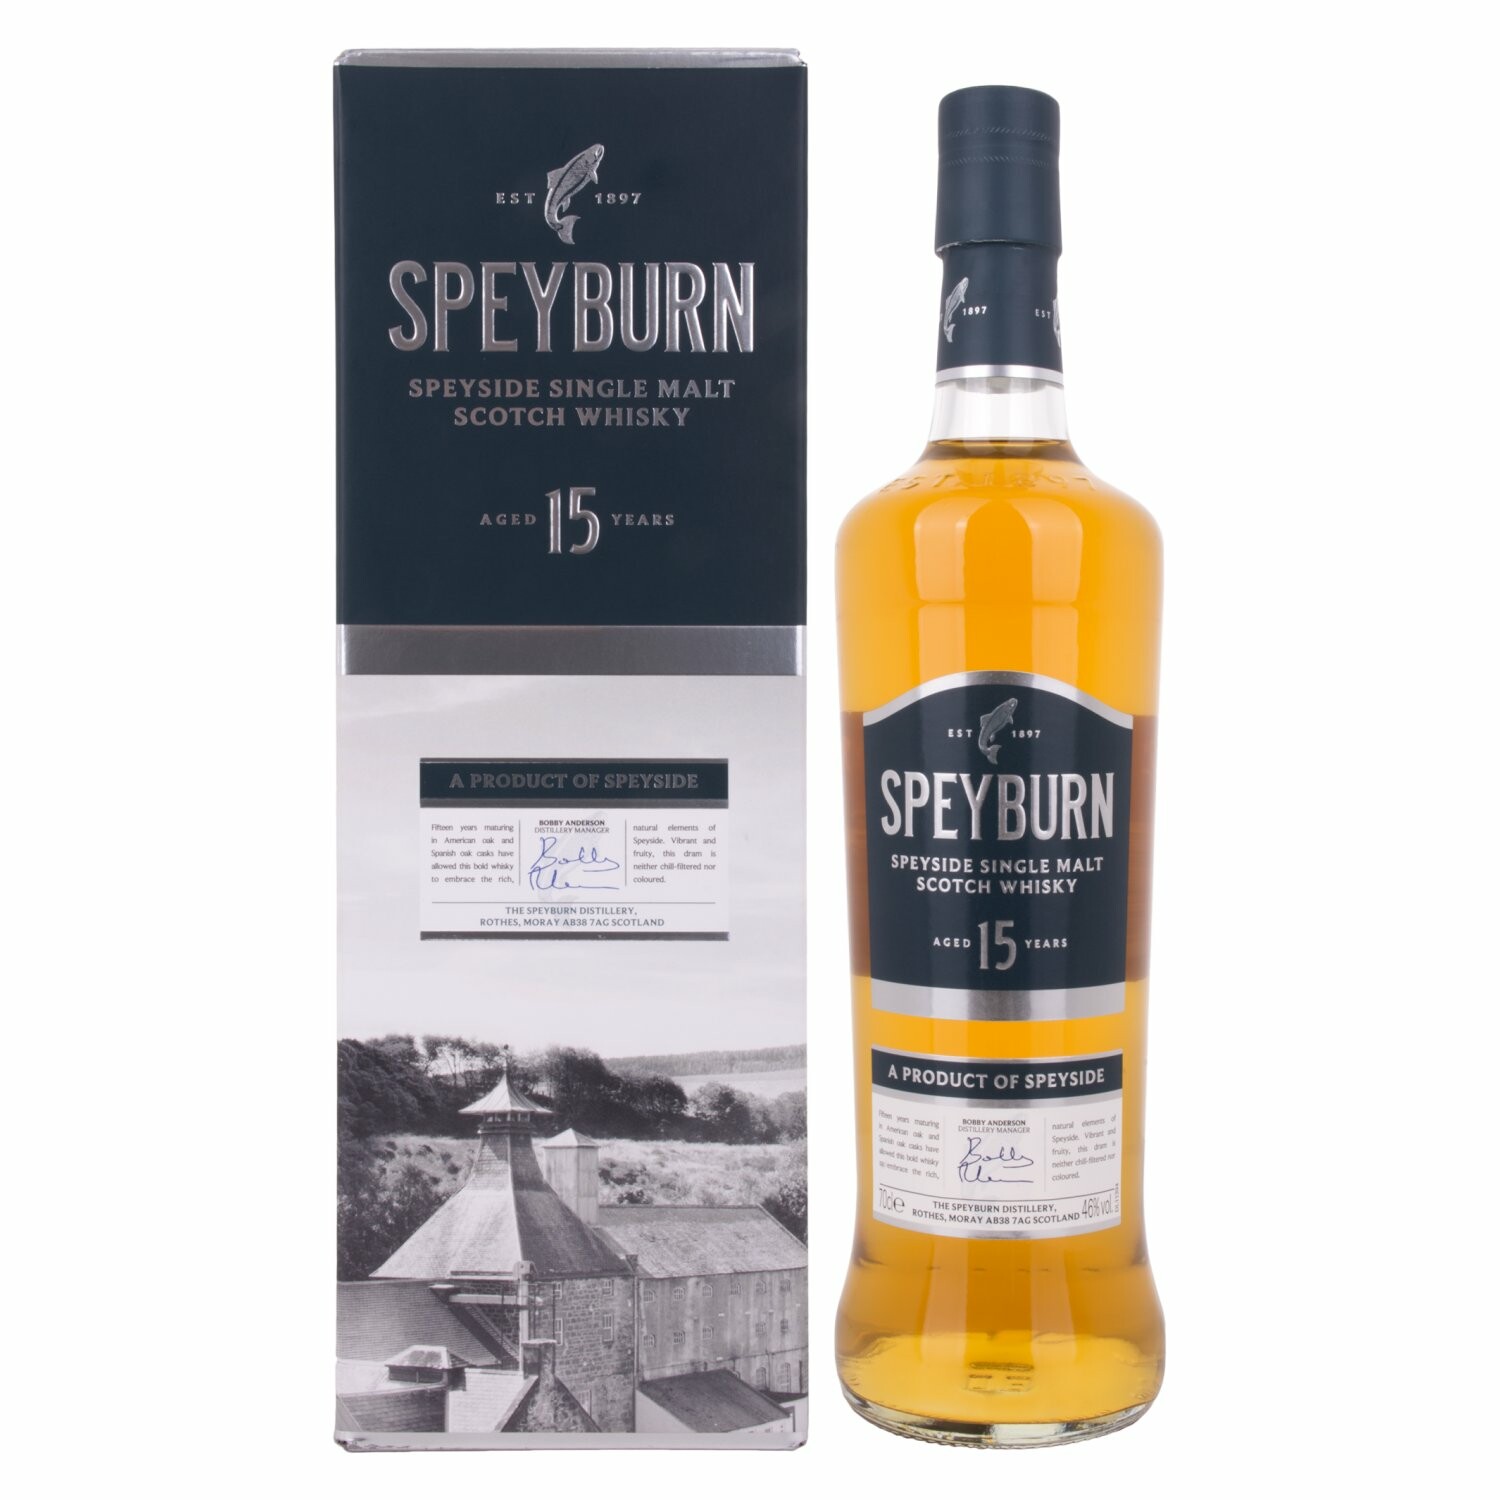 Speyburn 15 Years Old Speyside Single Malt Scotch Whisky 46% Vol. 0,7l in Giftbox